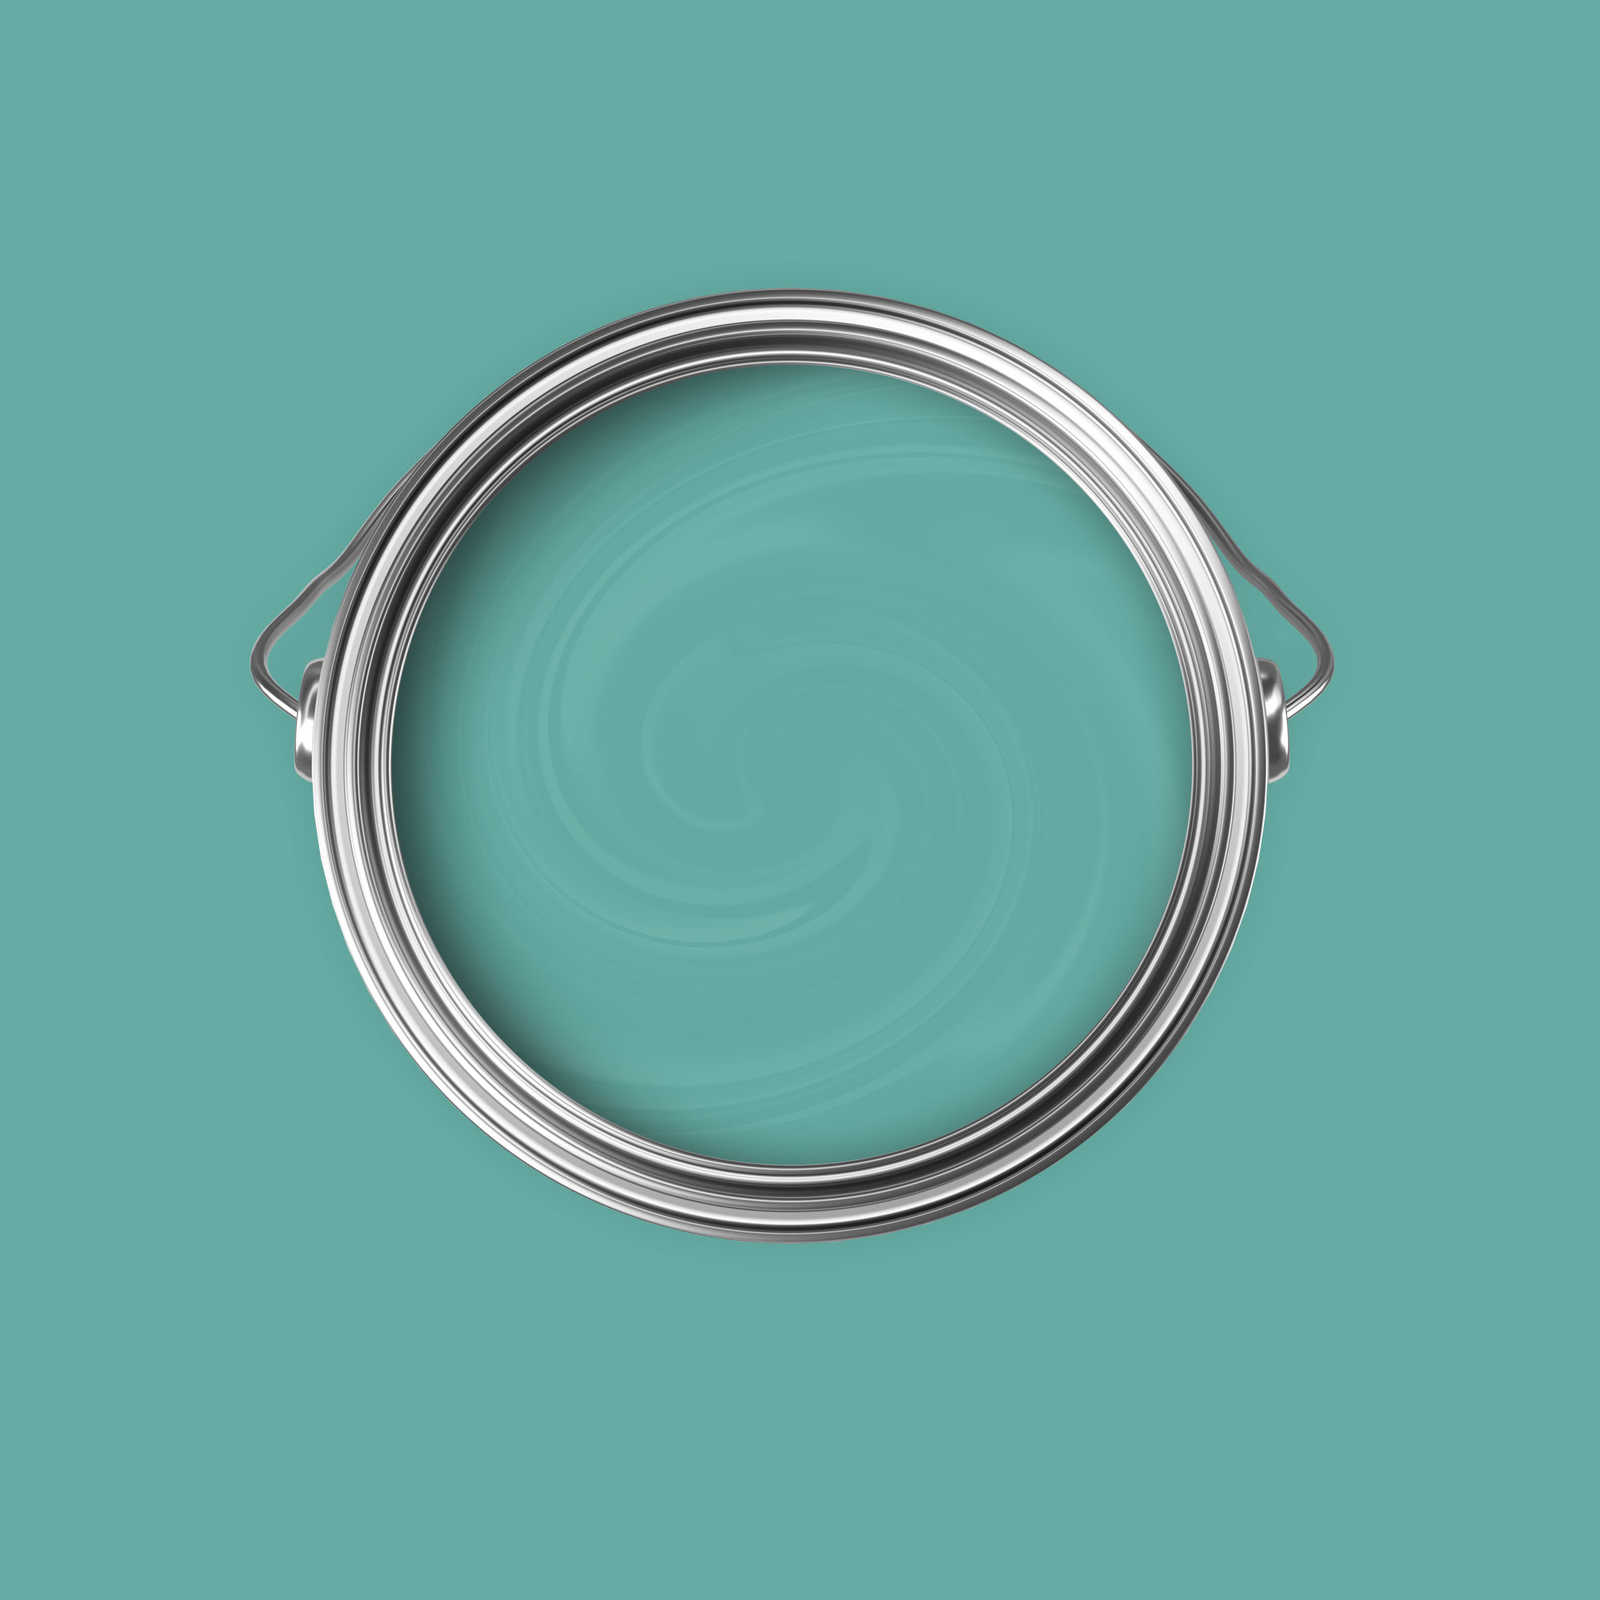             Premium Wandfarbe strahlendes Mint »Expressive Emerald« NW407 – 5 Liter
        